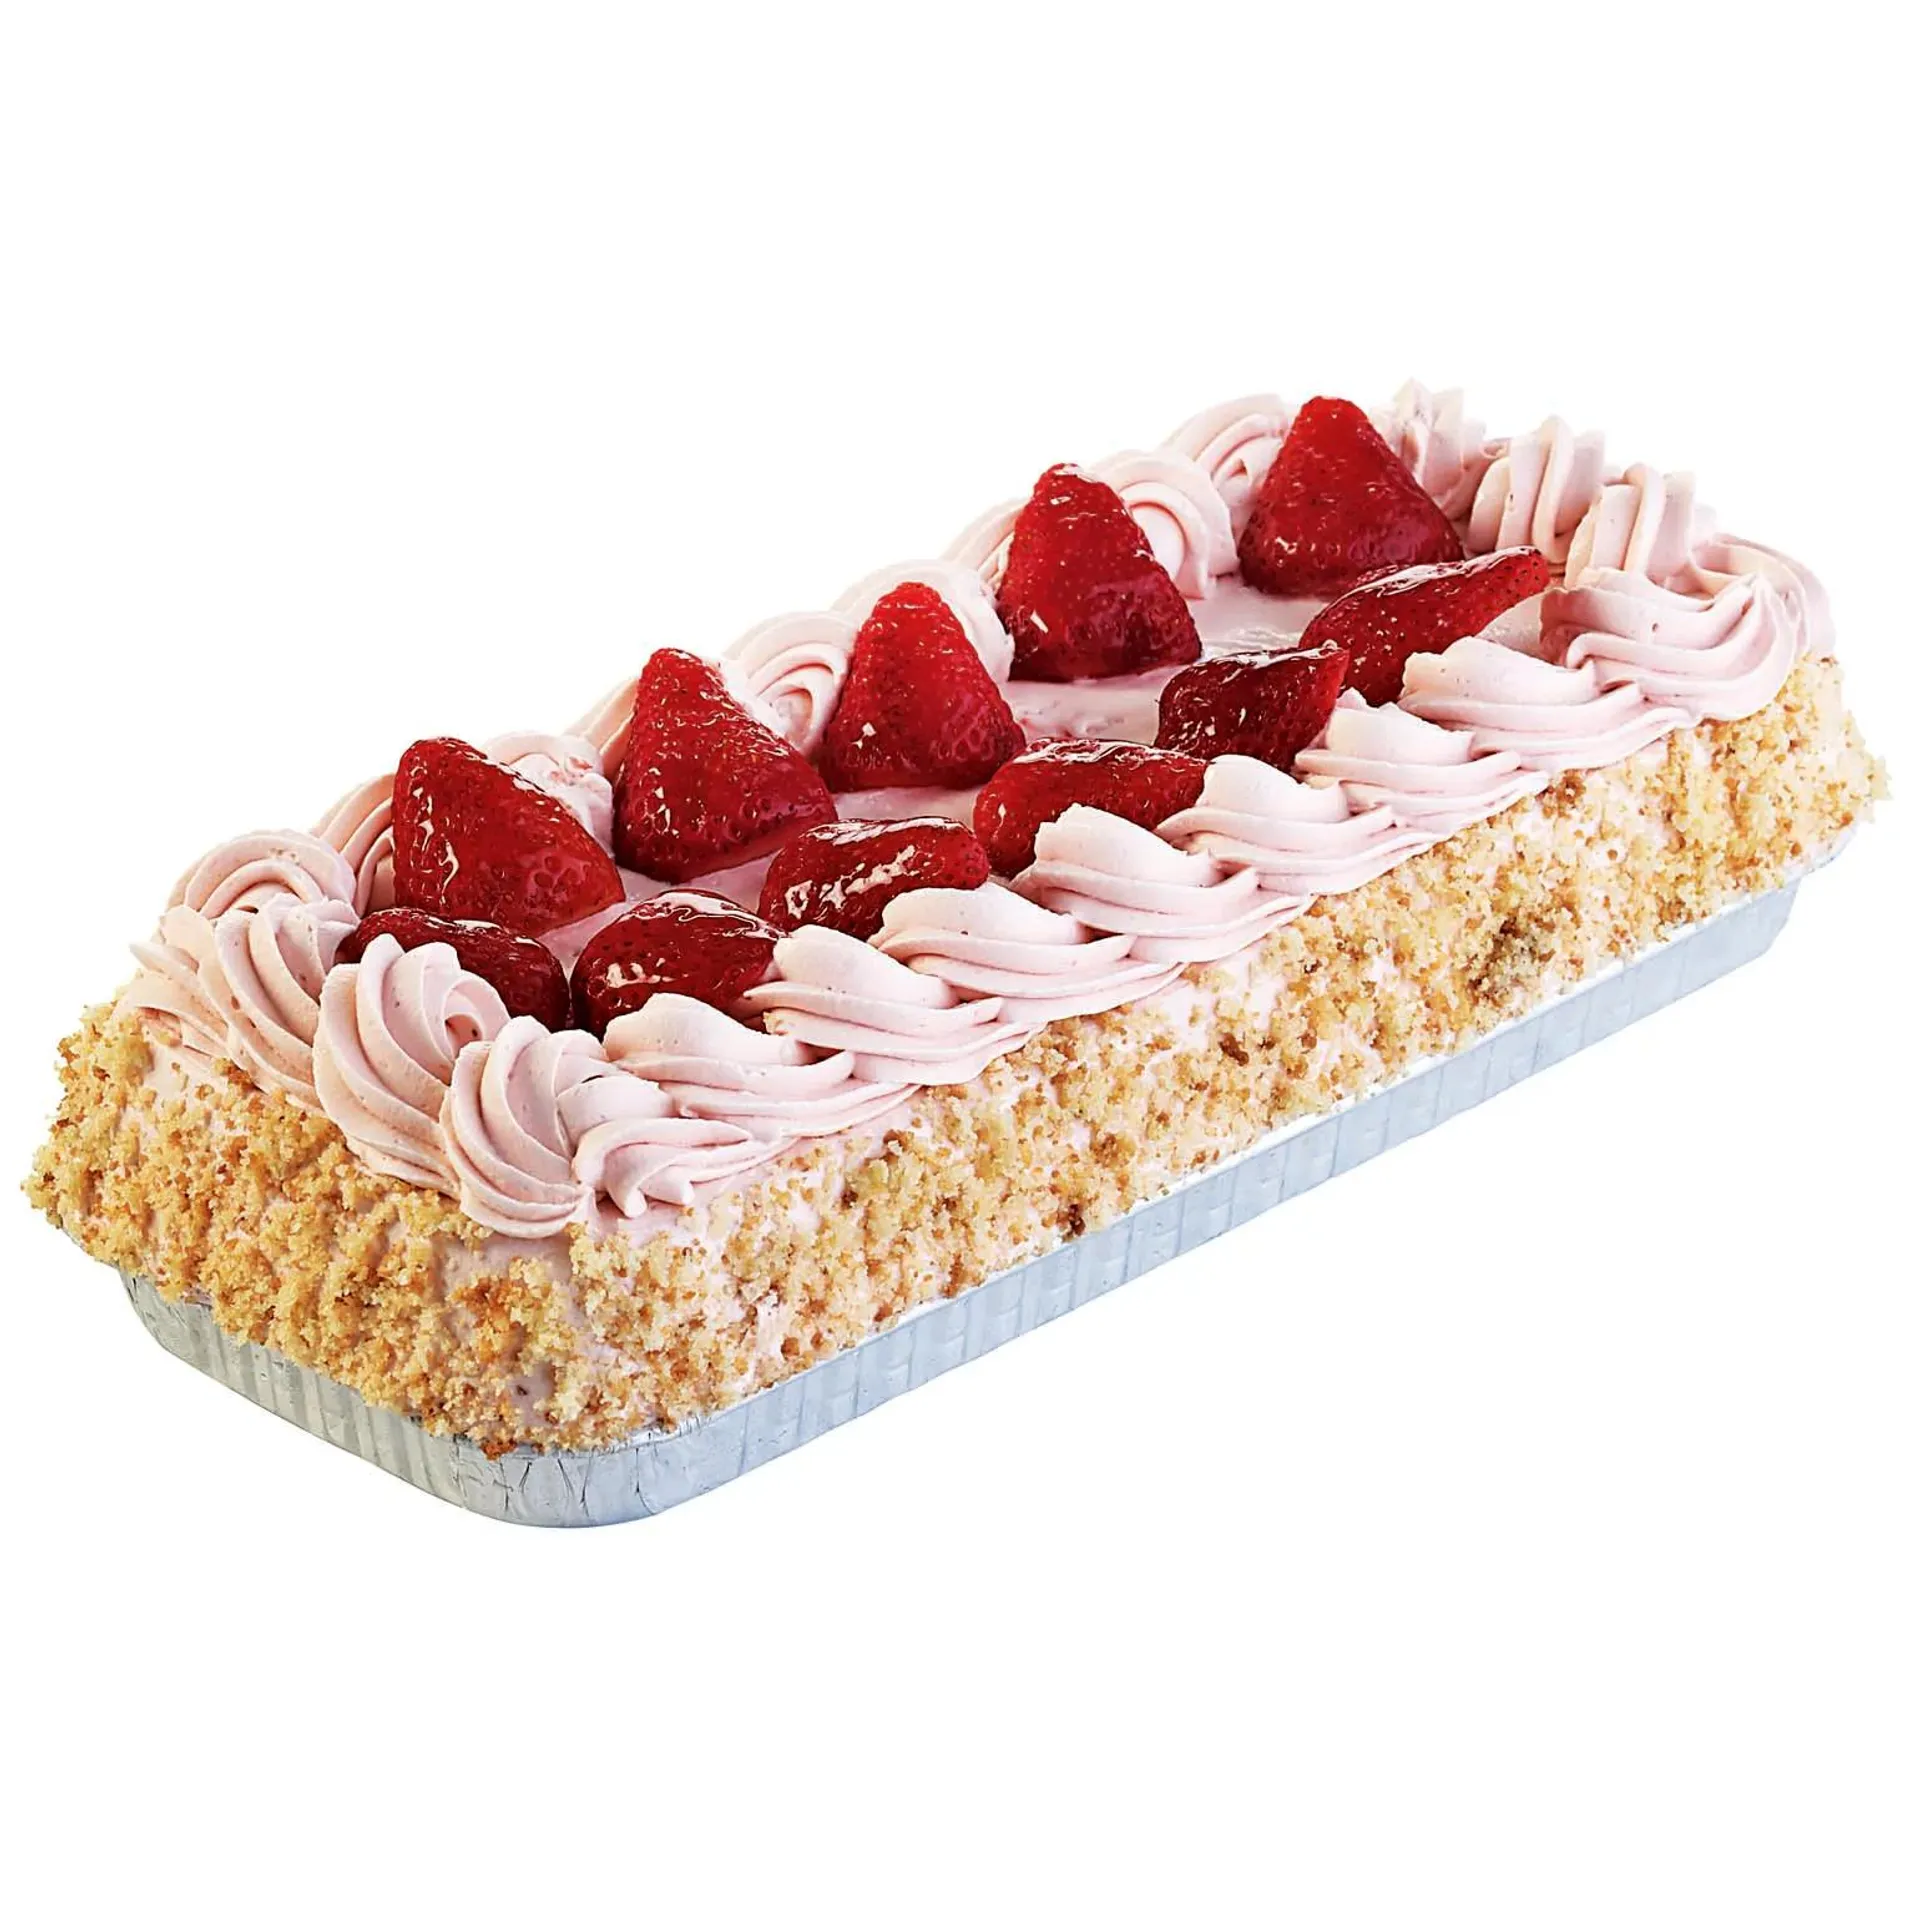 H‑E‑B Bakery Strawberry Tres Leches Cake